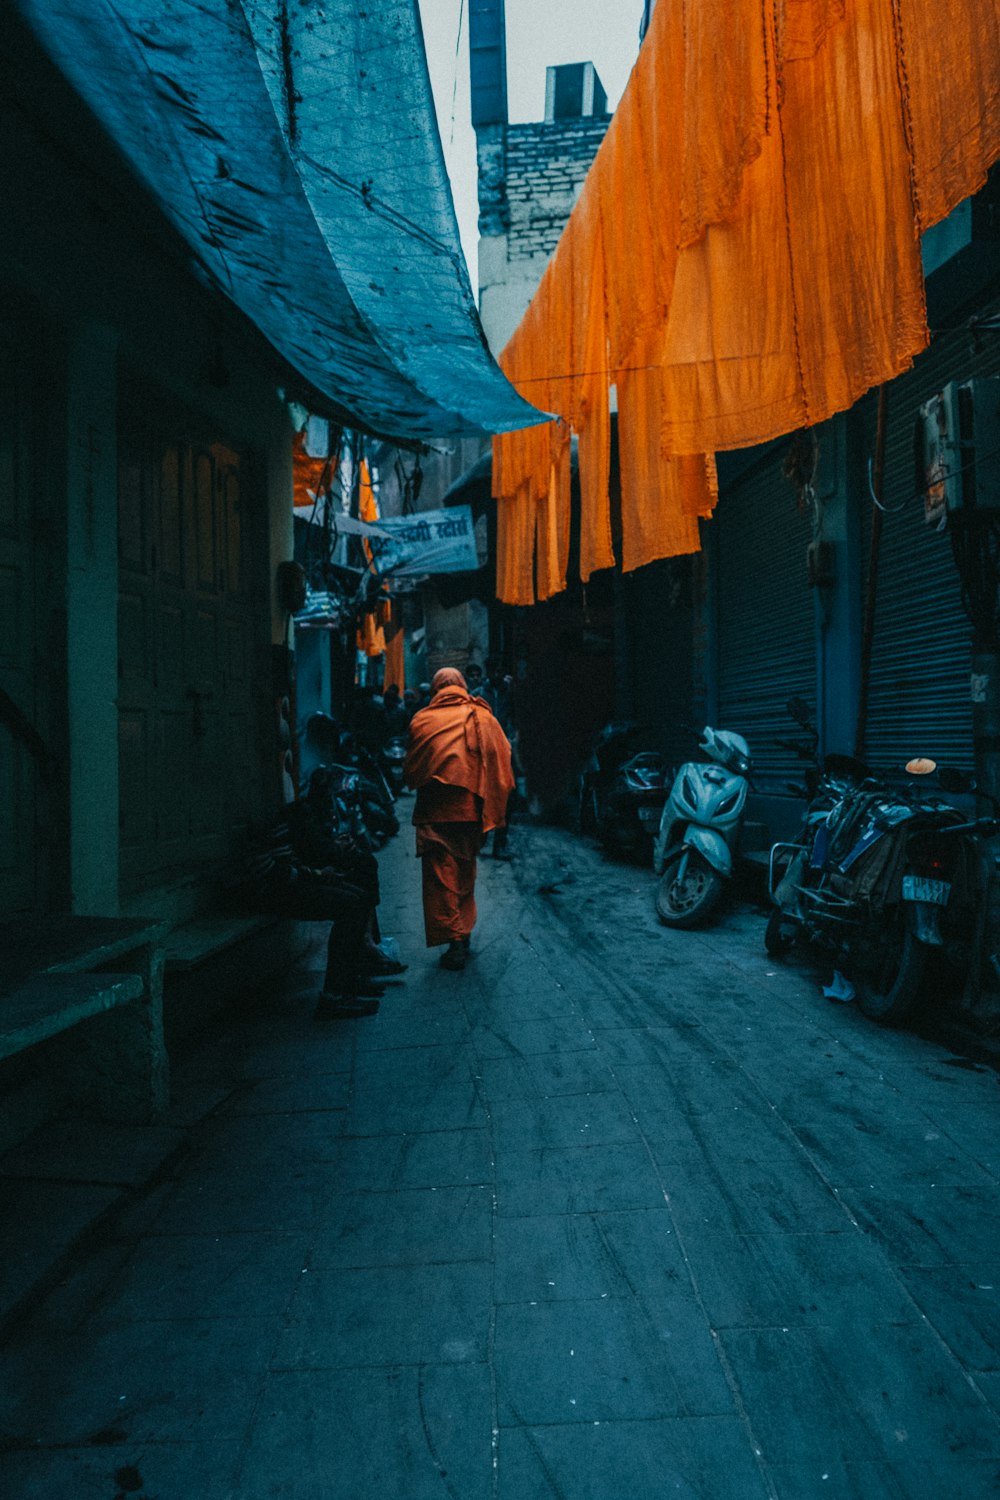 a man in an orange outfit walking down a street